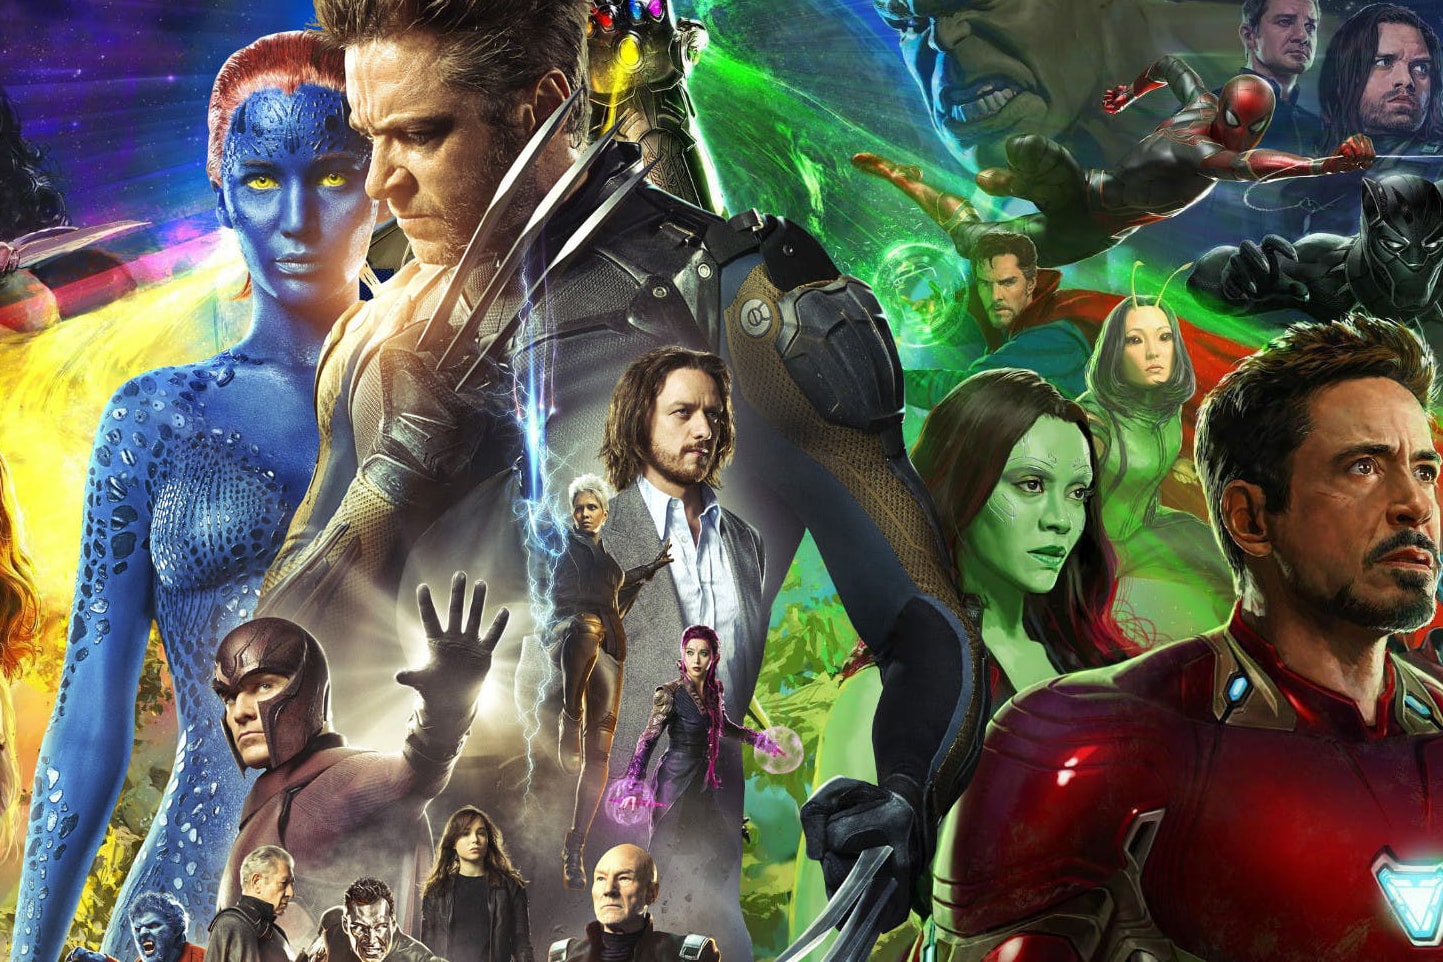 Disney 21 Century 20 Fox Agree Offer $71.3 Billion Stock Acquisition merger merge acquire bid outbid X-Men Fantastic Four Marvel Avengers